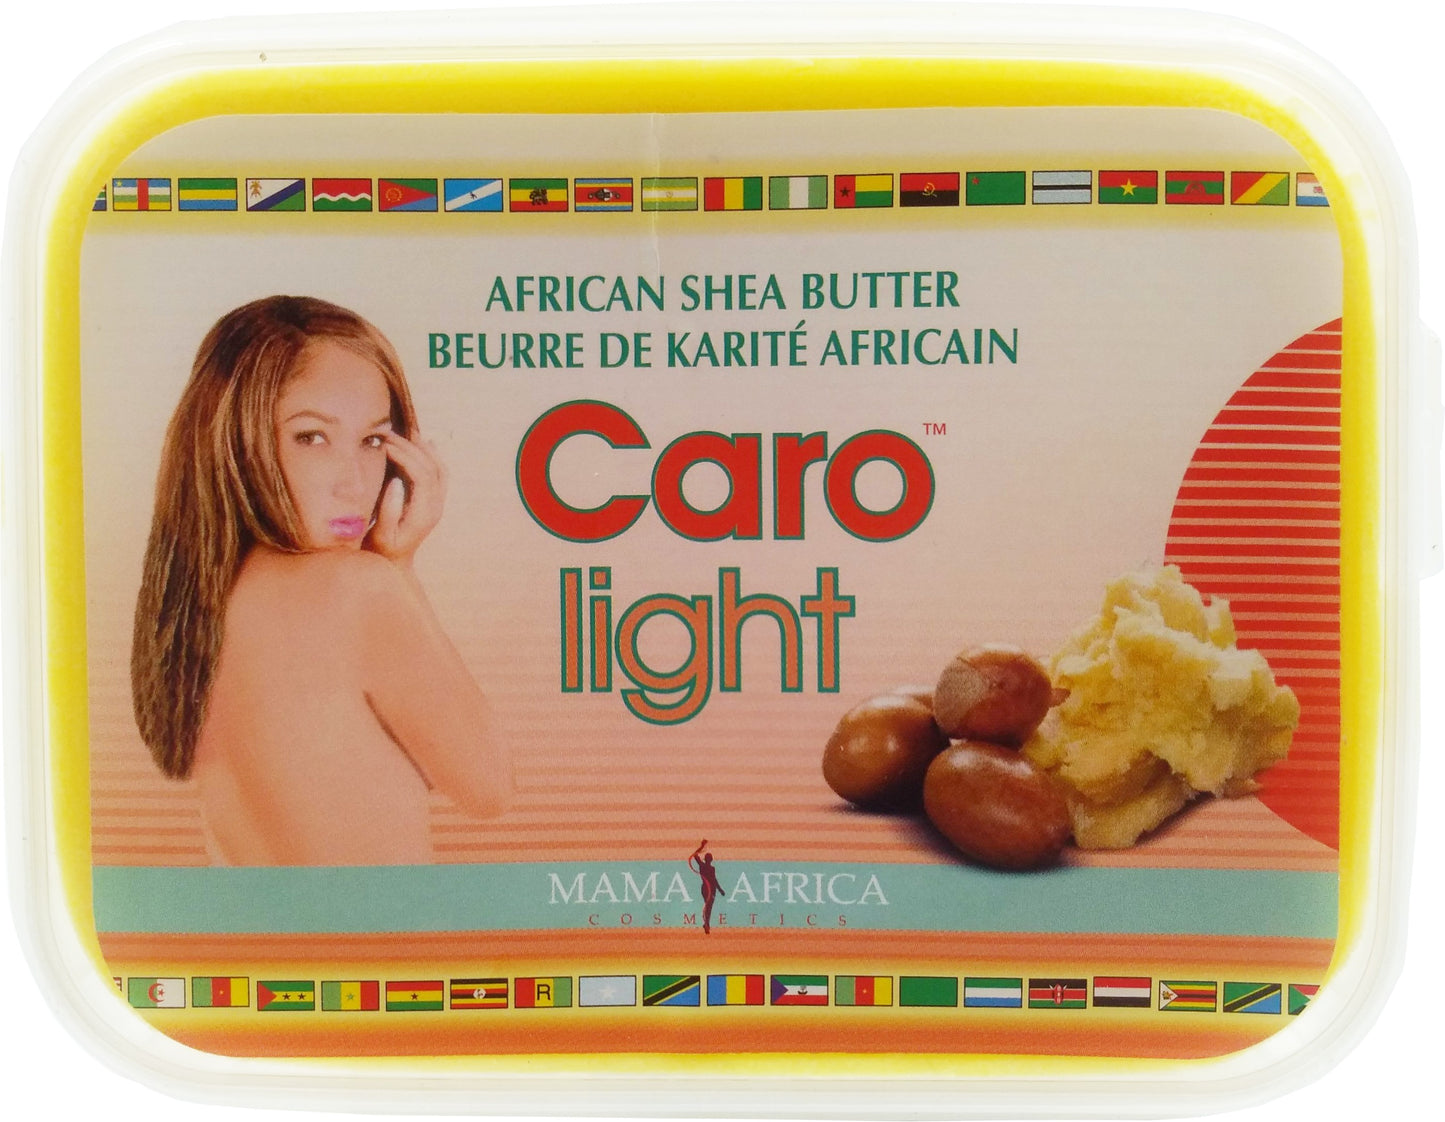 (COSMETICS SKIN CARE) MA Caro Light African Shea Butter 200 gr.